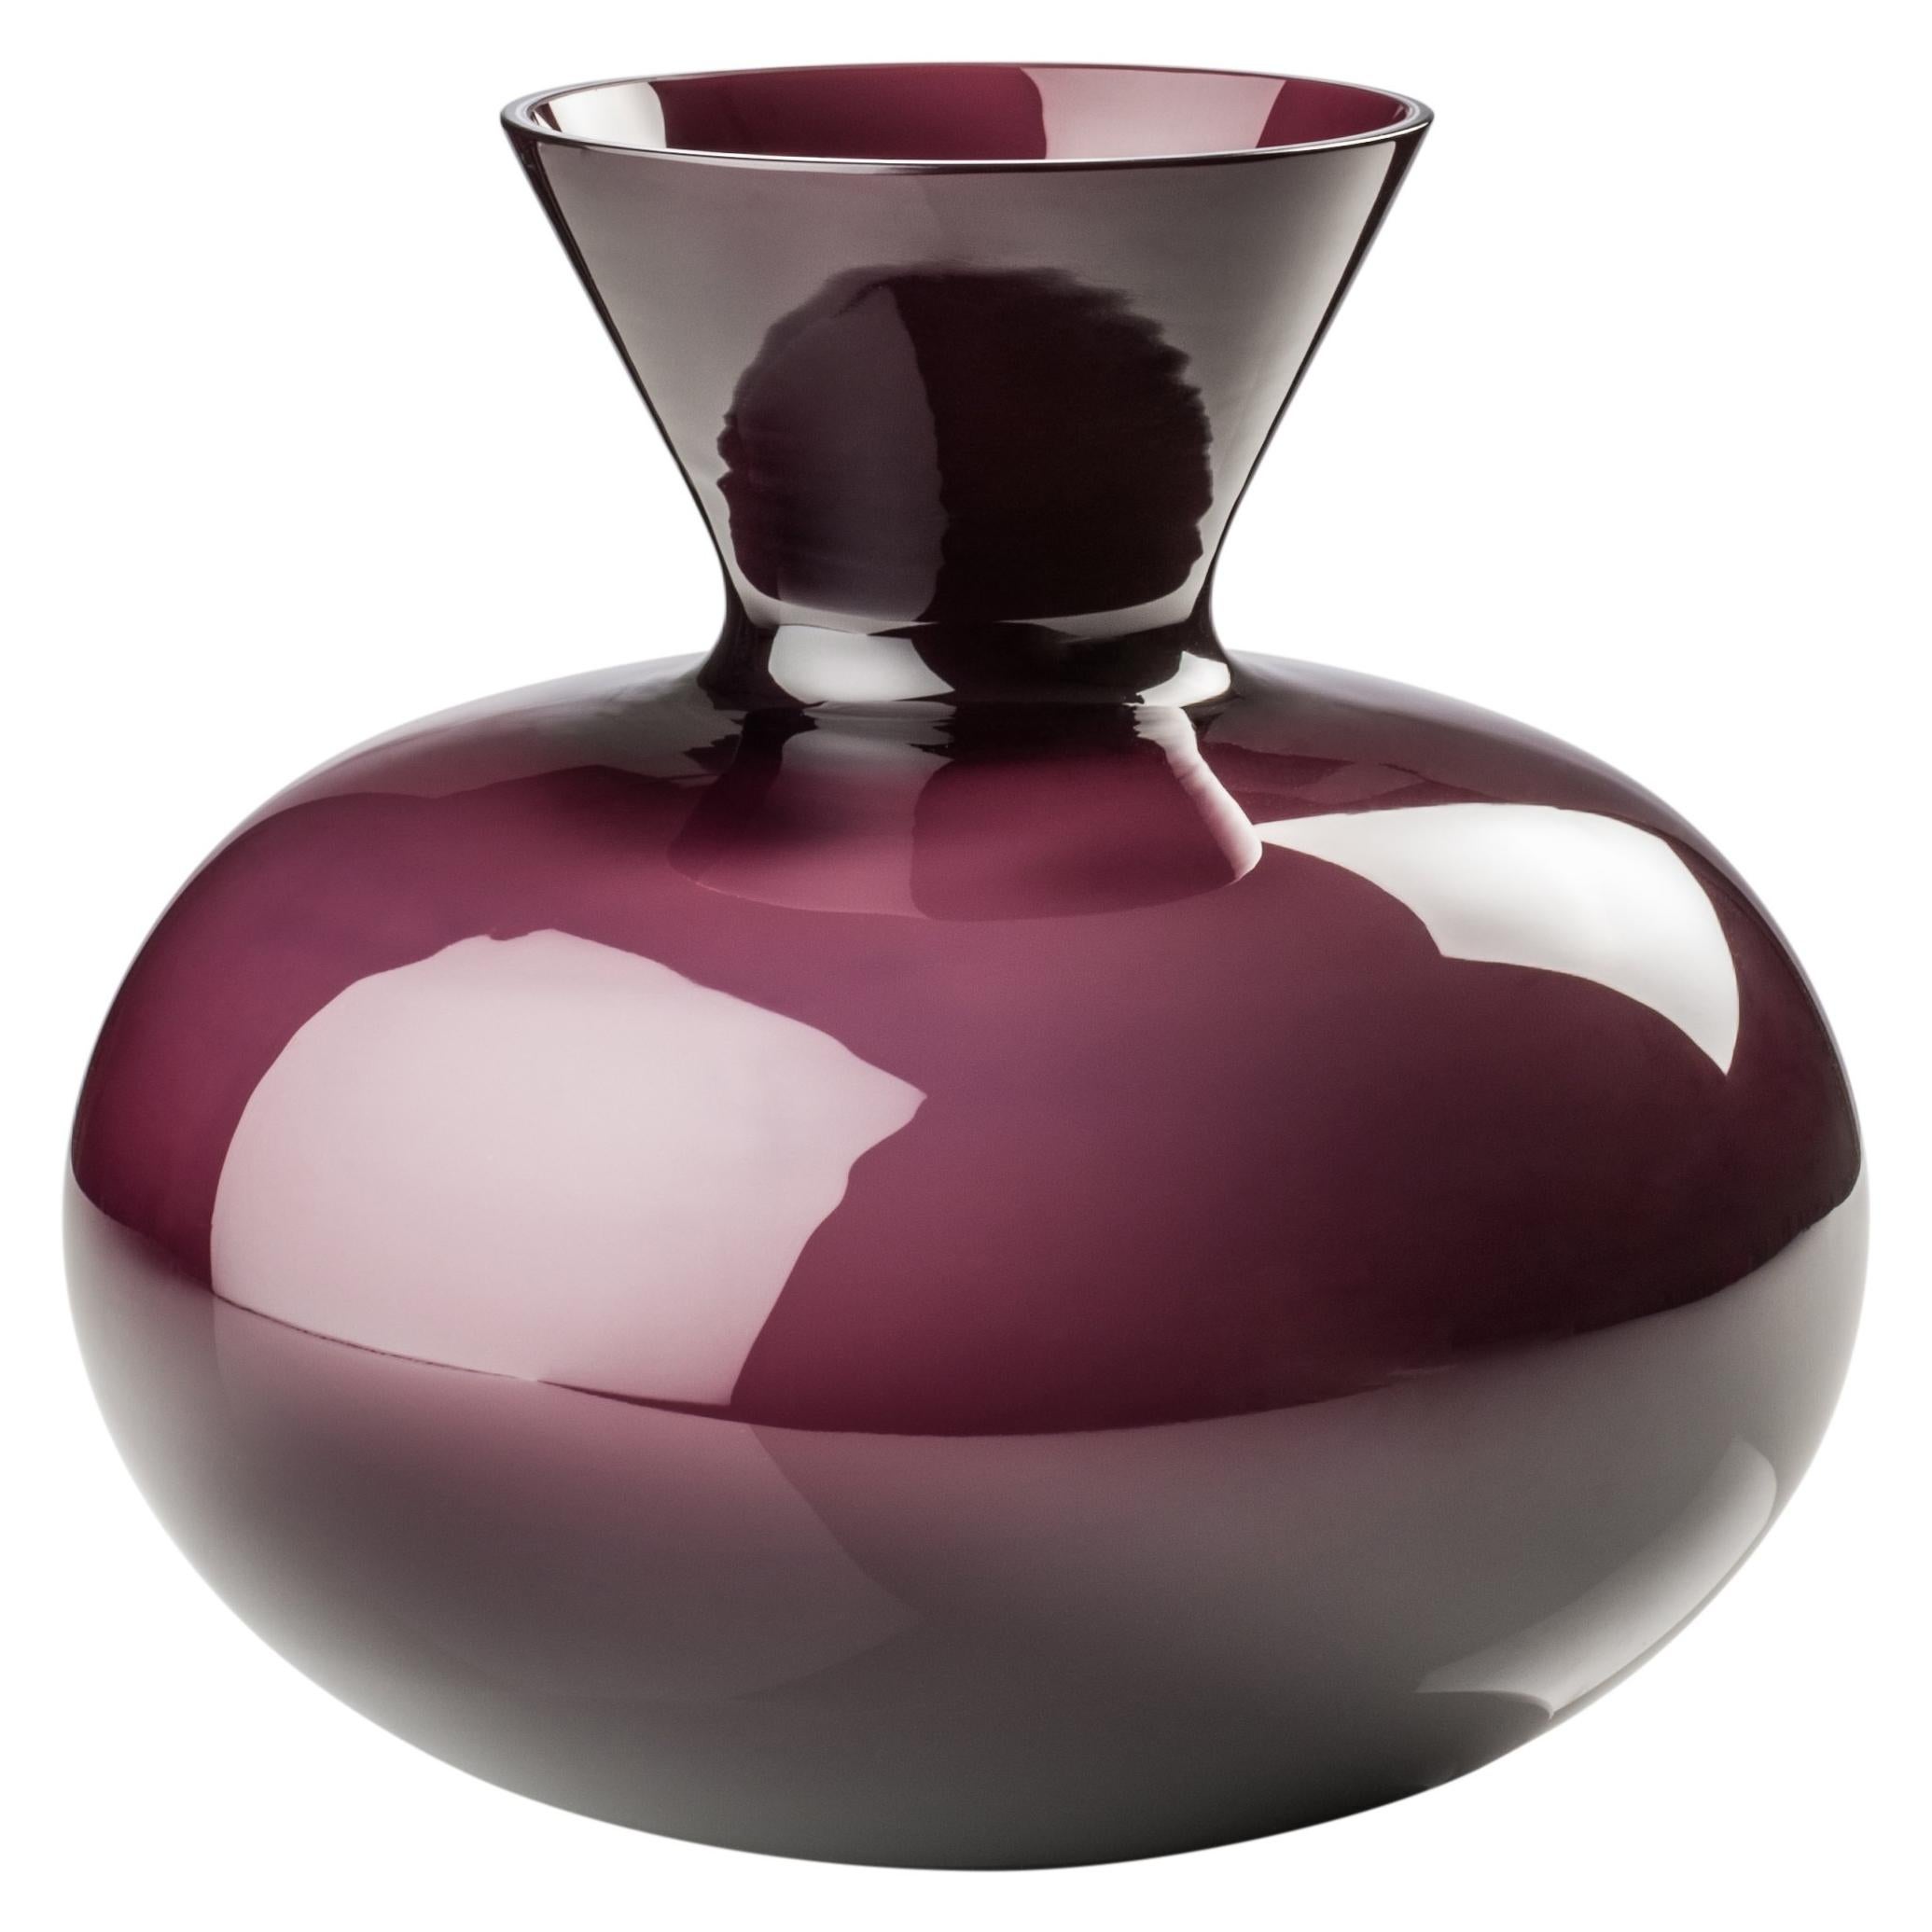 Idria Small Round Glass Vase in Violet by Venini